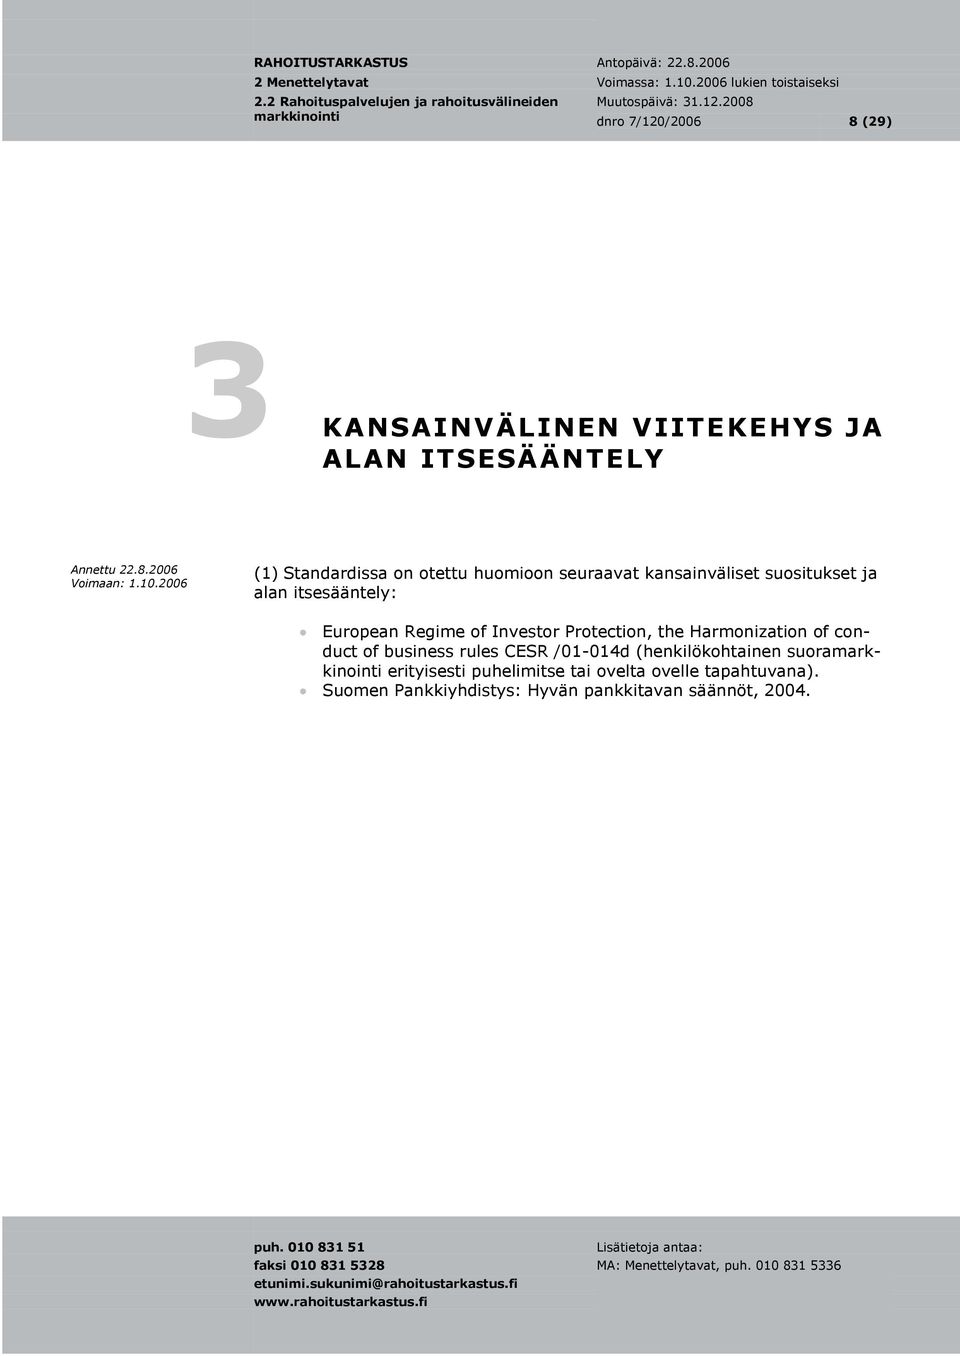 Protection, the Harmonization of conduct of business rules CESR /01-014d (henkilökohtainen suora